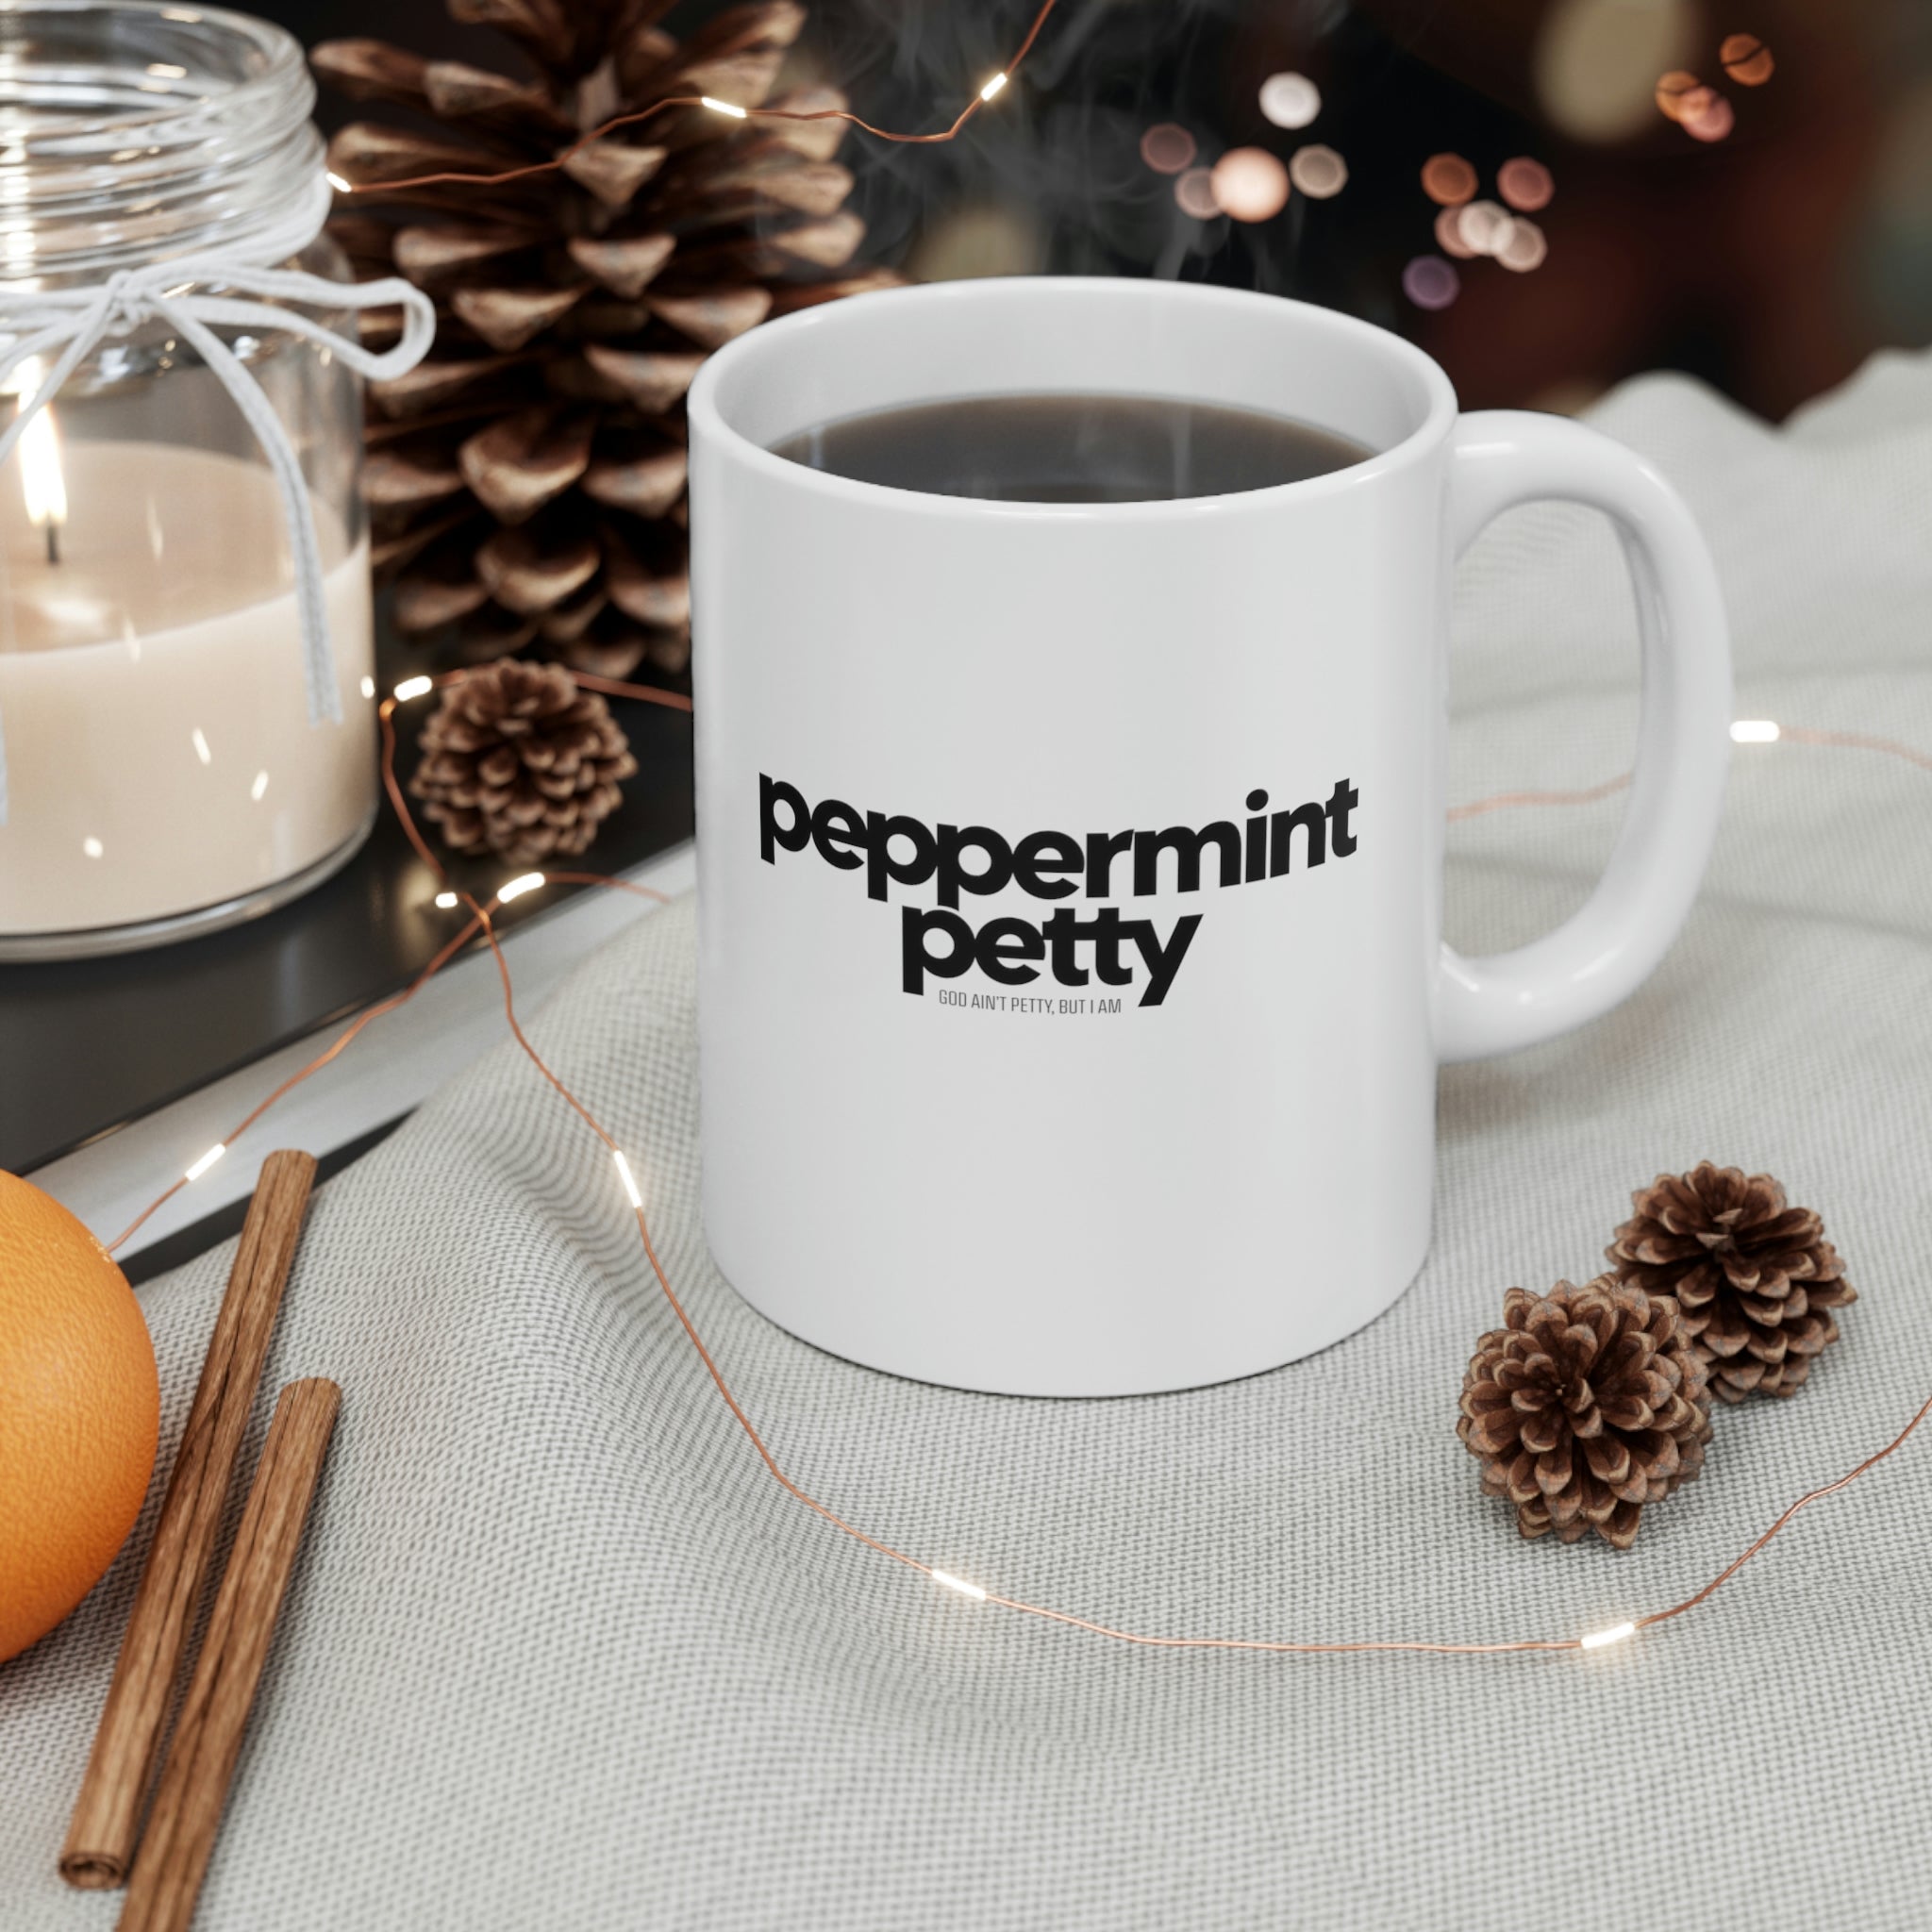 Peppermint Petty Mug 11oz (White/Black)-Mug-The Original God Ain't Petty But I Am